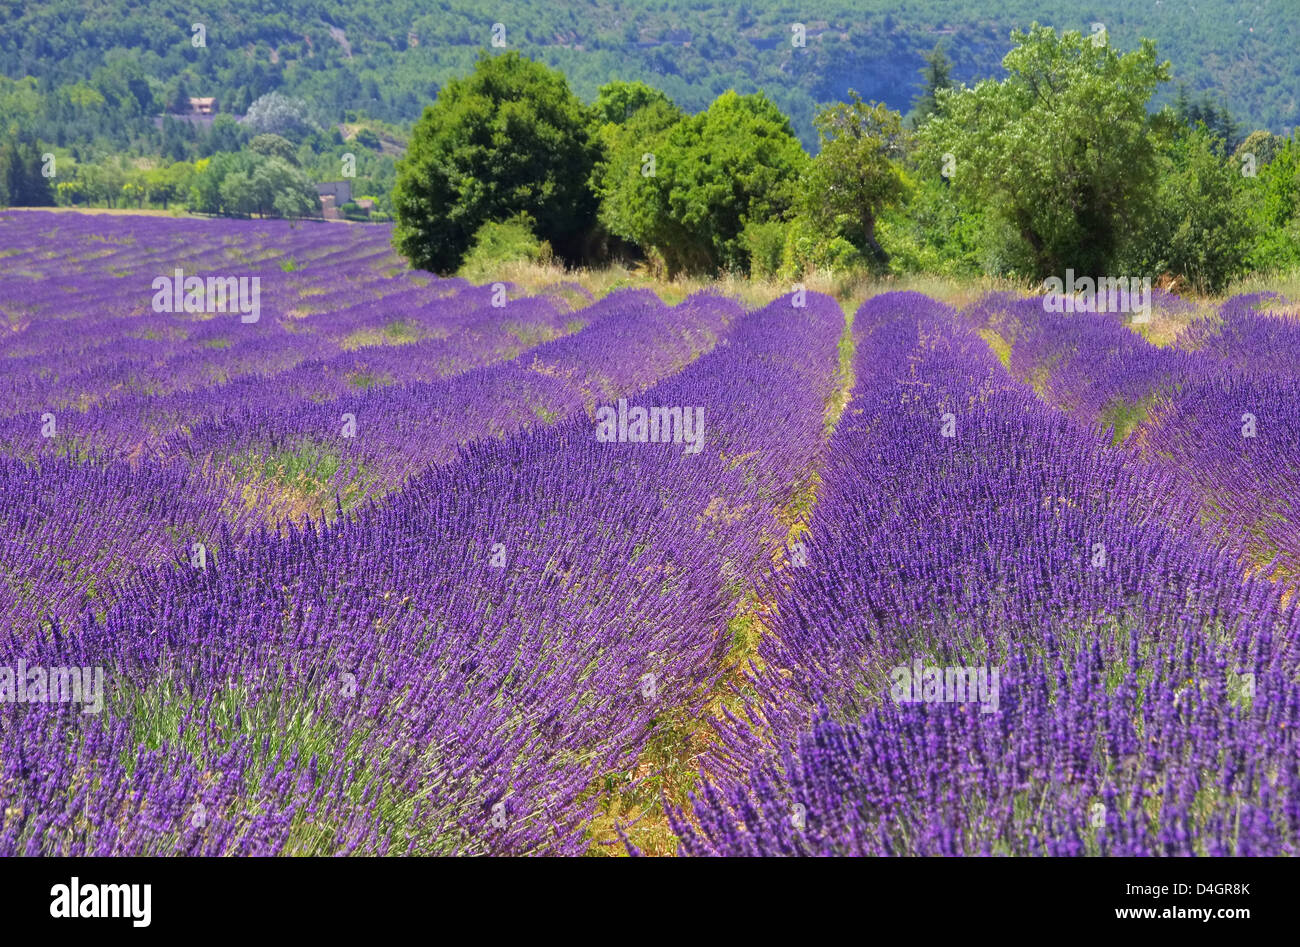 Lavendelfeld - lavender field 104 Stock Photo